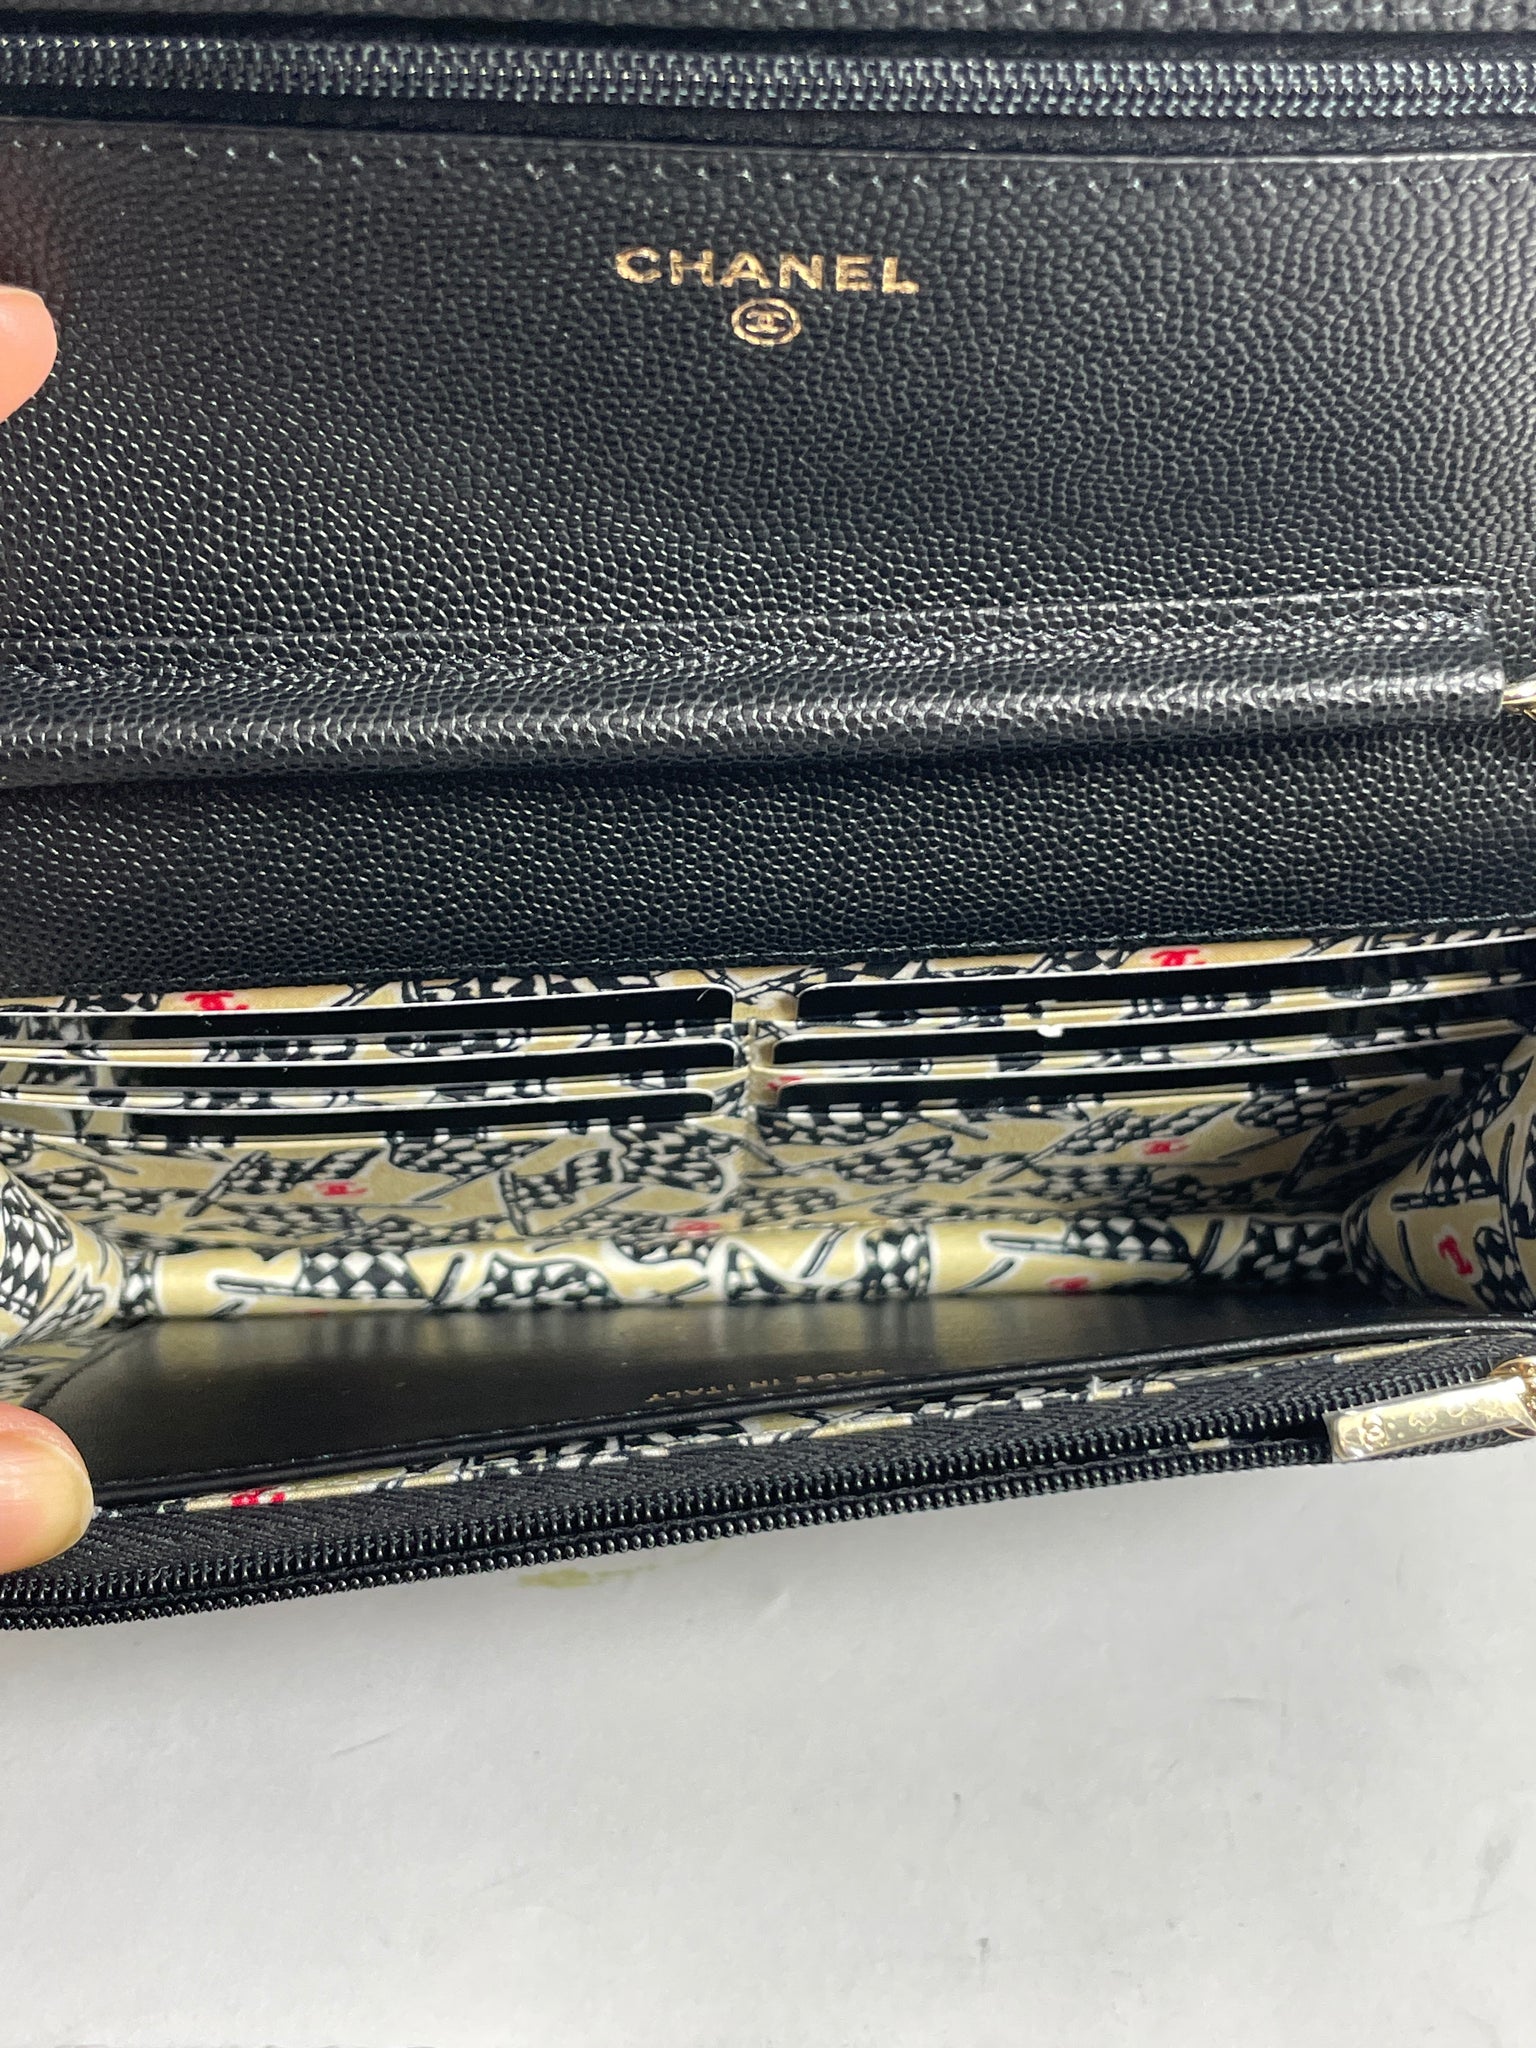 Chanel Black Caviar WOC Wallet On Chain Big CC Handbag – The